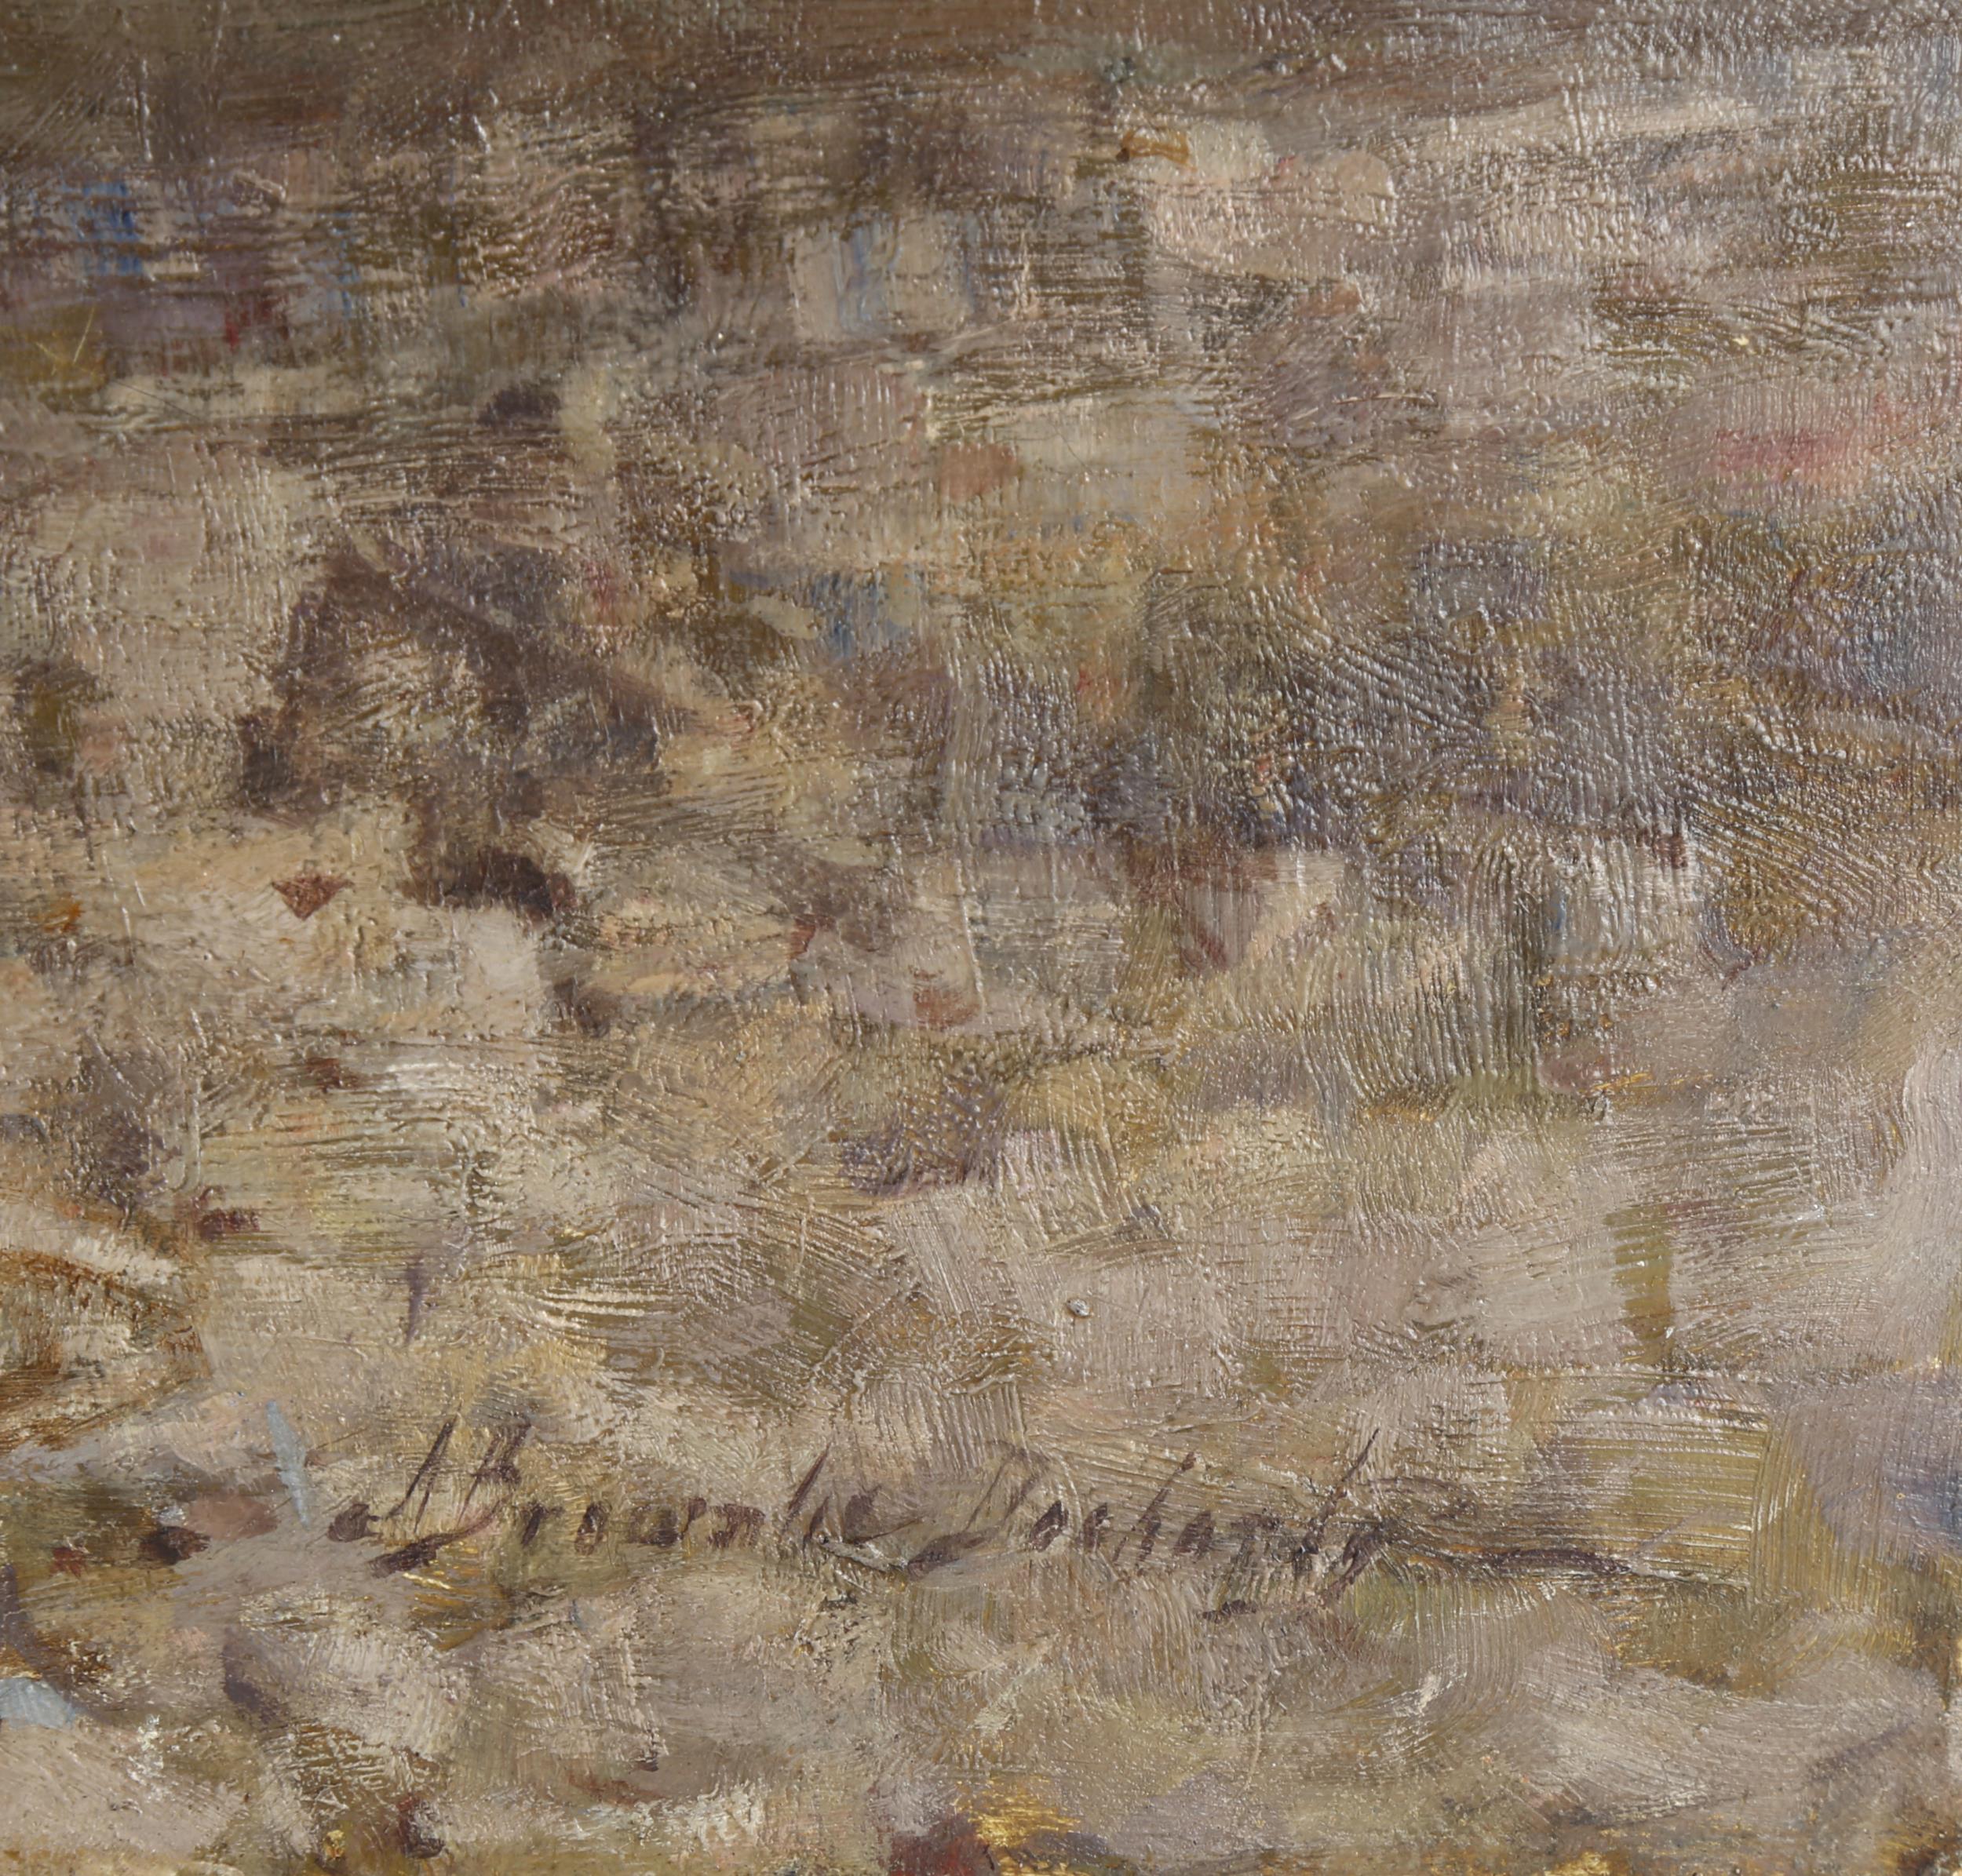 Alexander Brownlie Docharty (1862 - 1940), sheep in moonlit landscape, oil on canvas, signed, 60cm x - Image 2 of 4